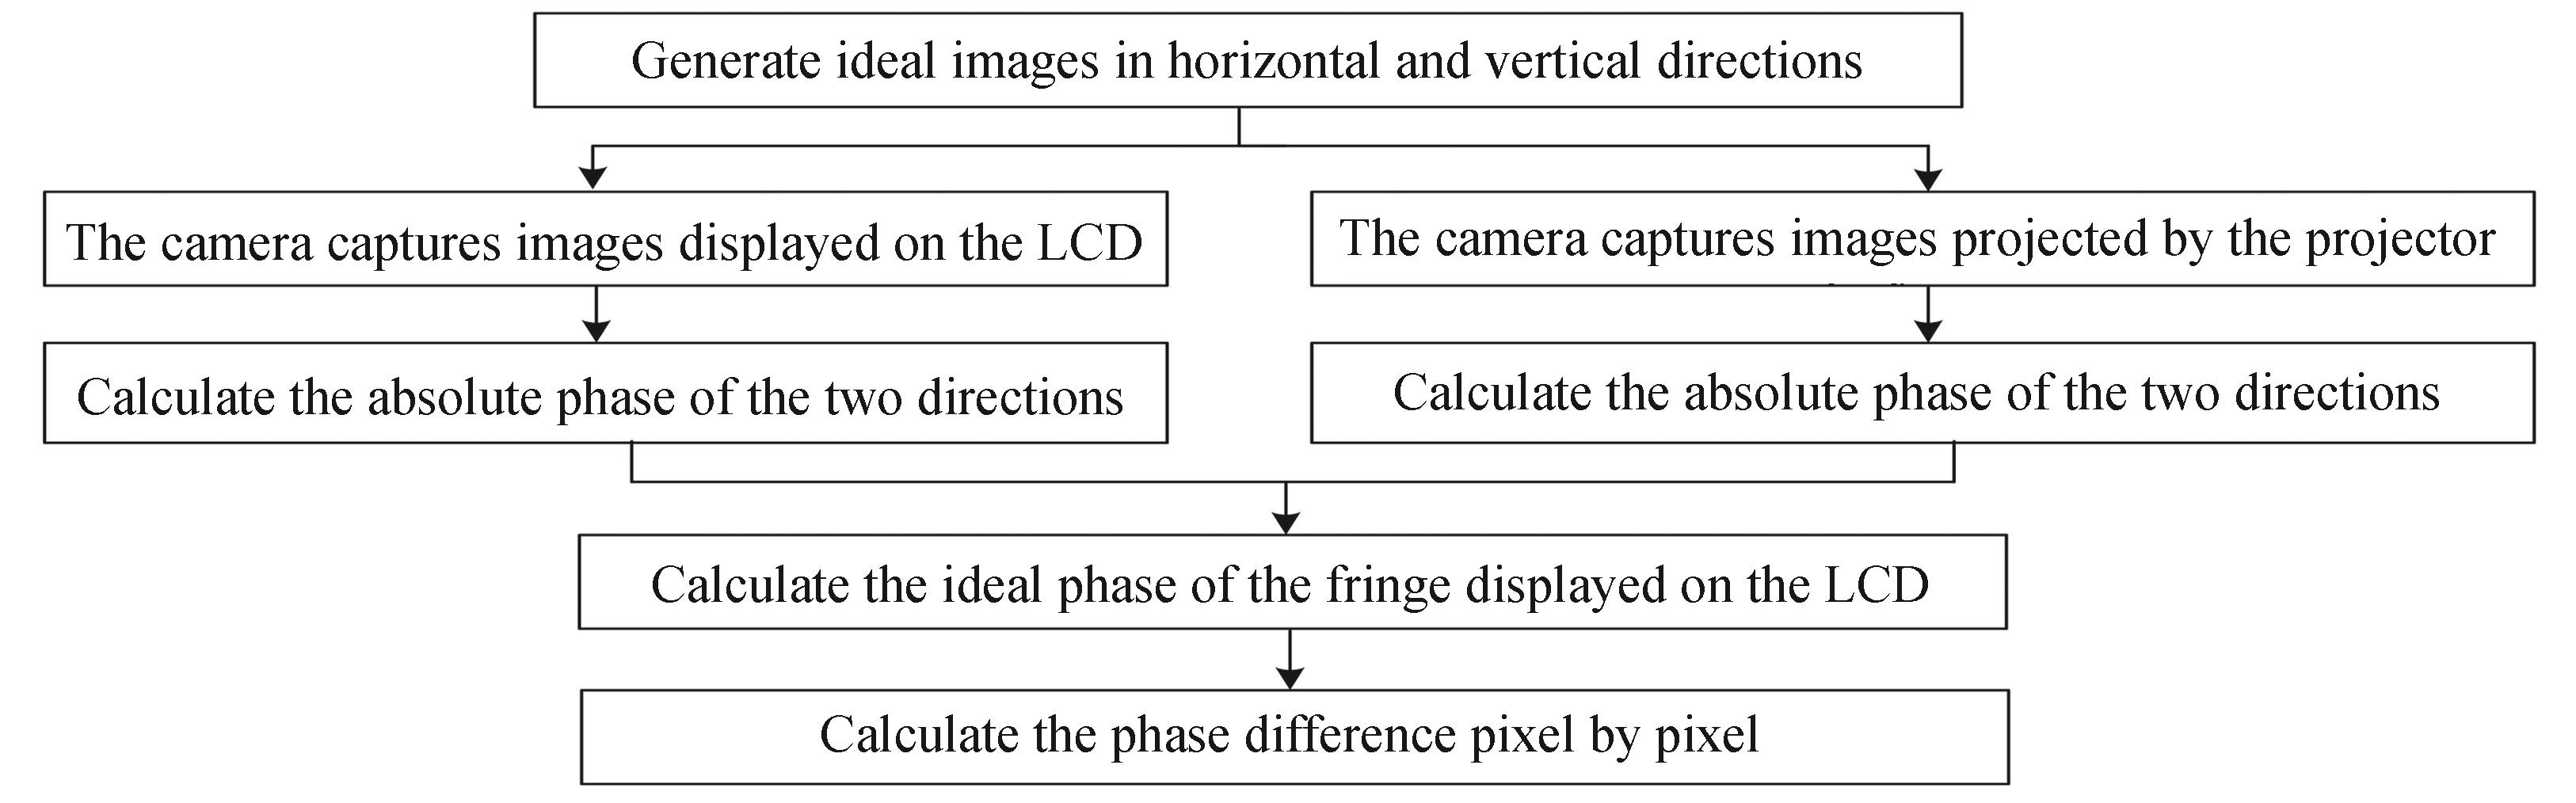 Logical block diagram of measuring distortion of full-field image